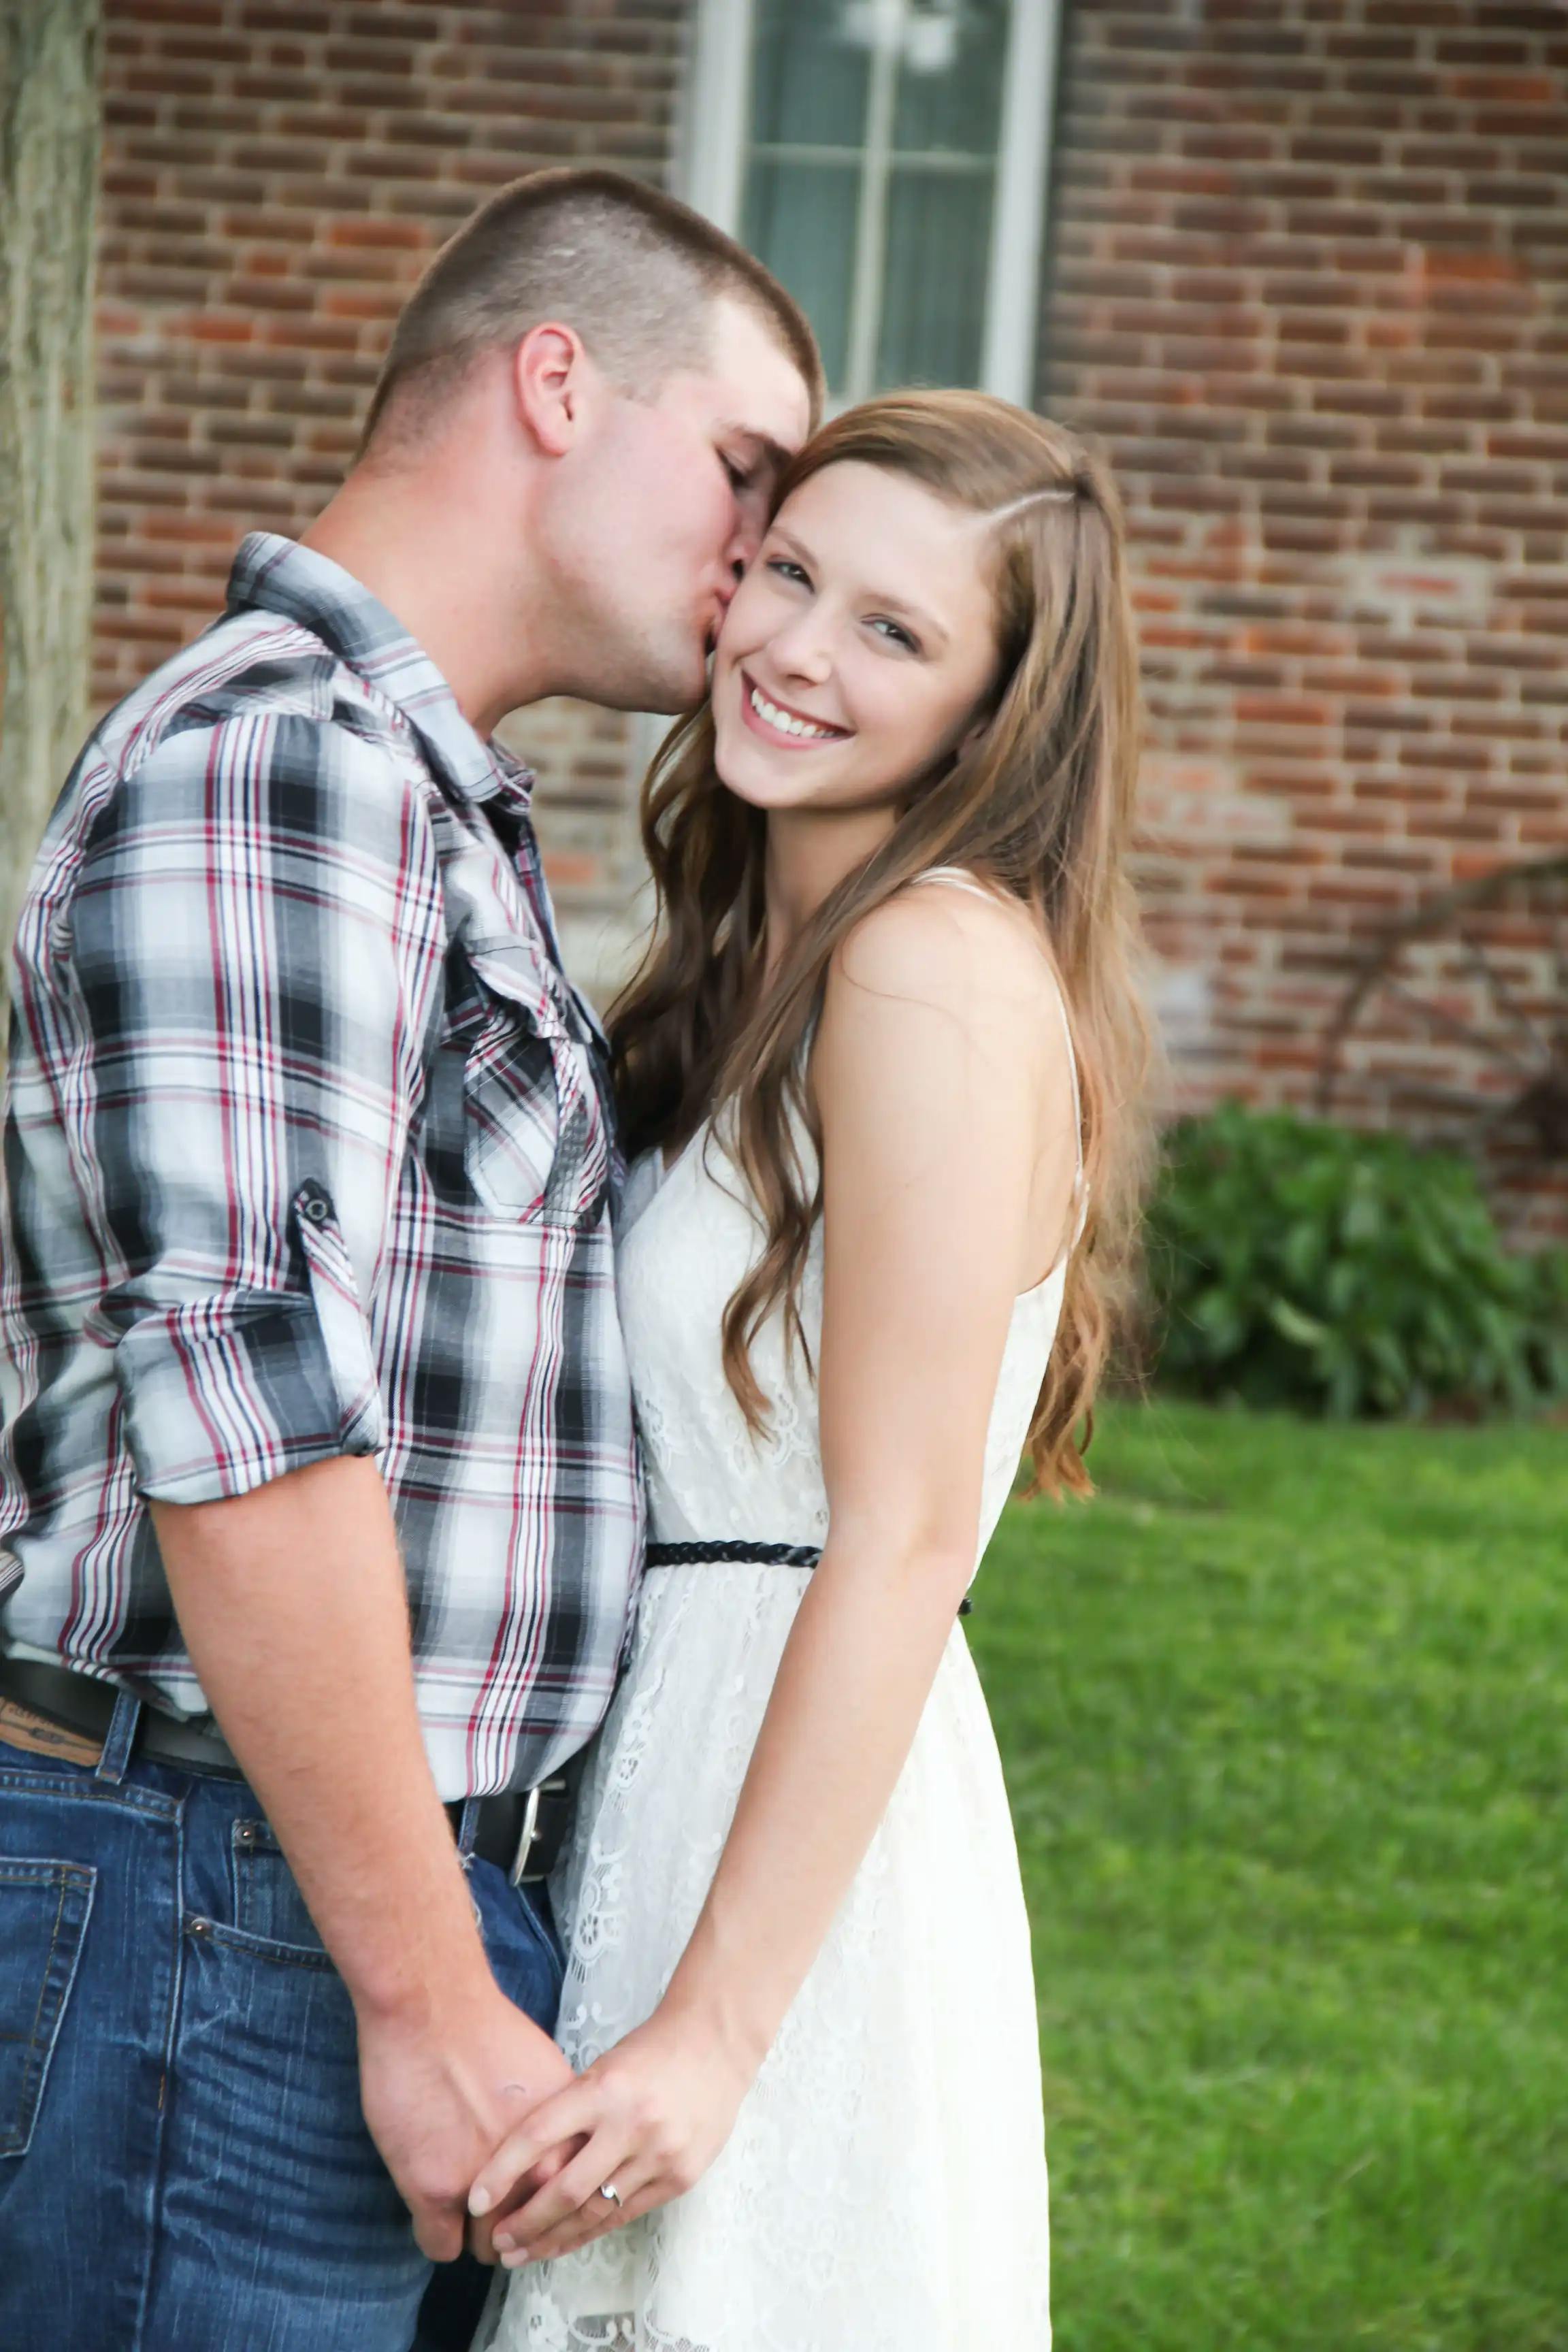 Guy kissing girls cheek in engagement photo